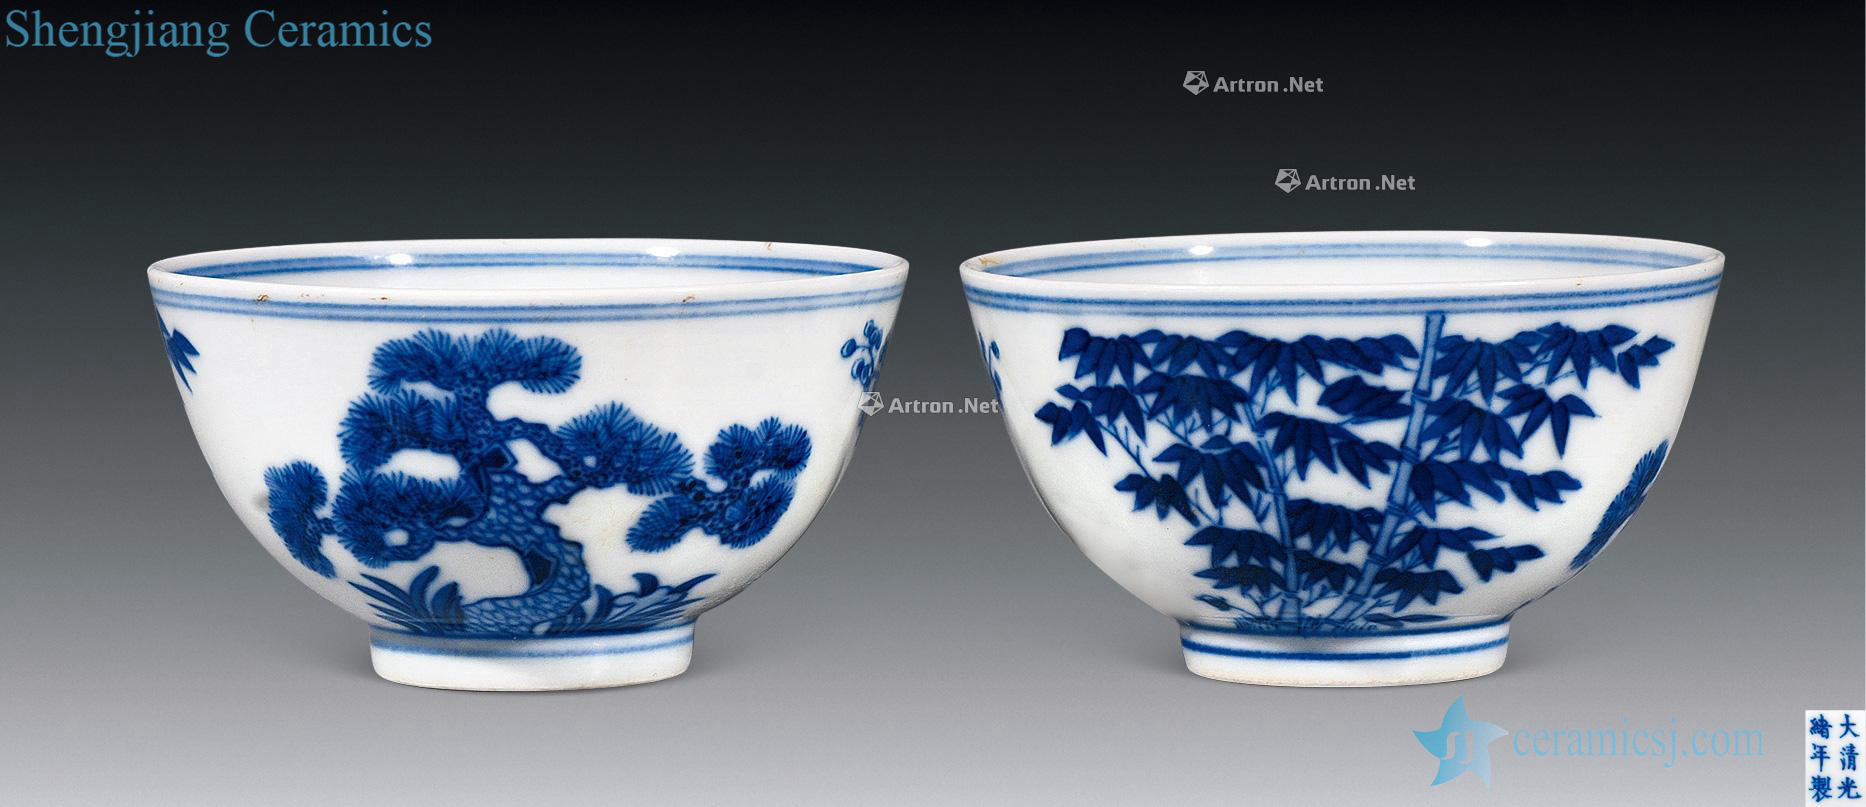 Qing guangxu Blue and white shochiku may offer them (a)